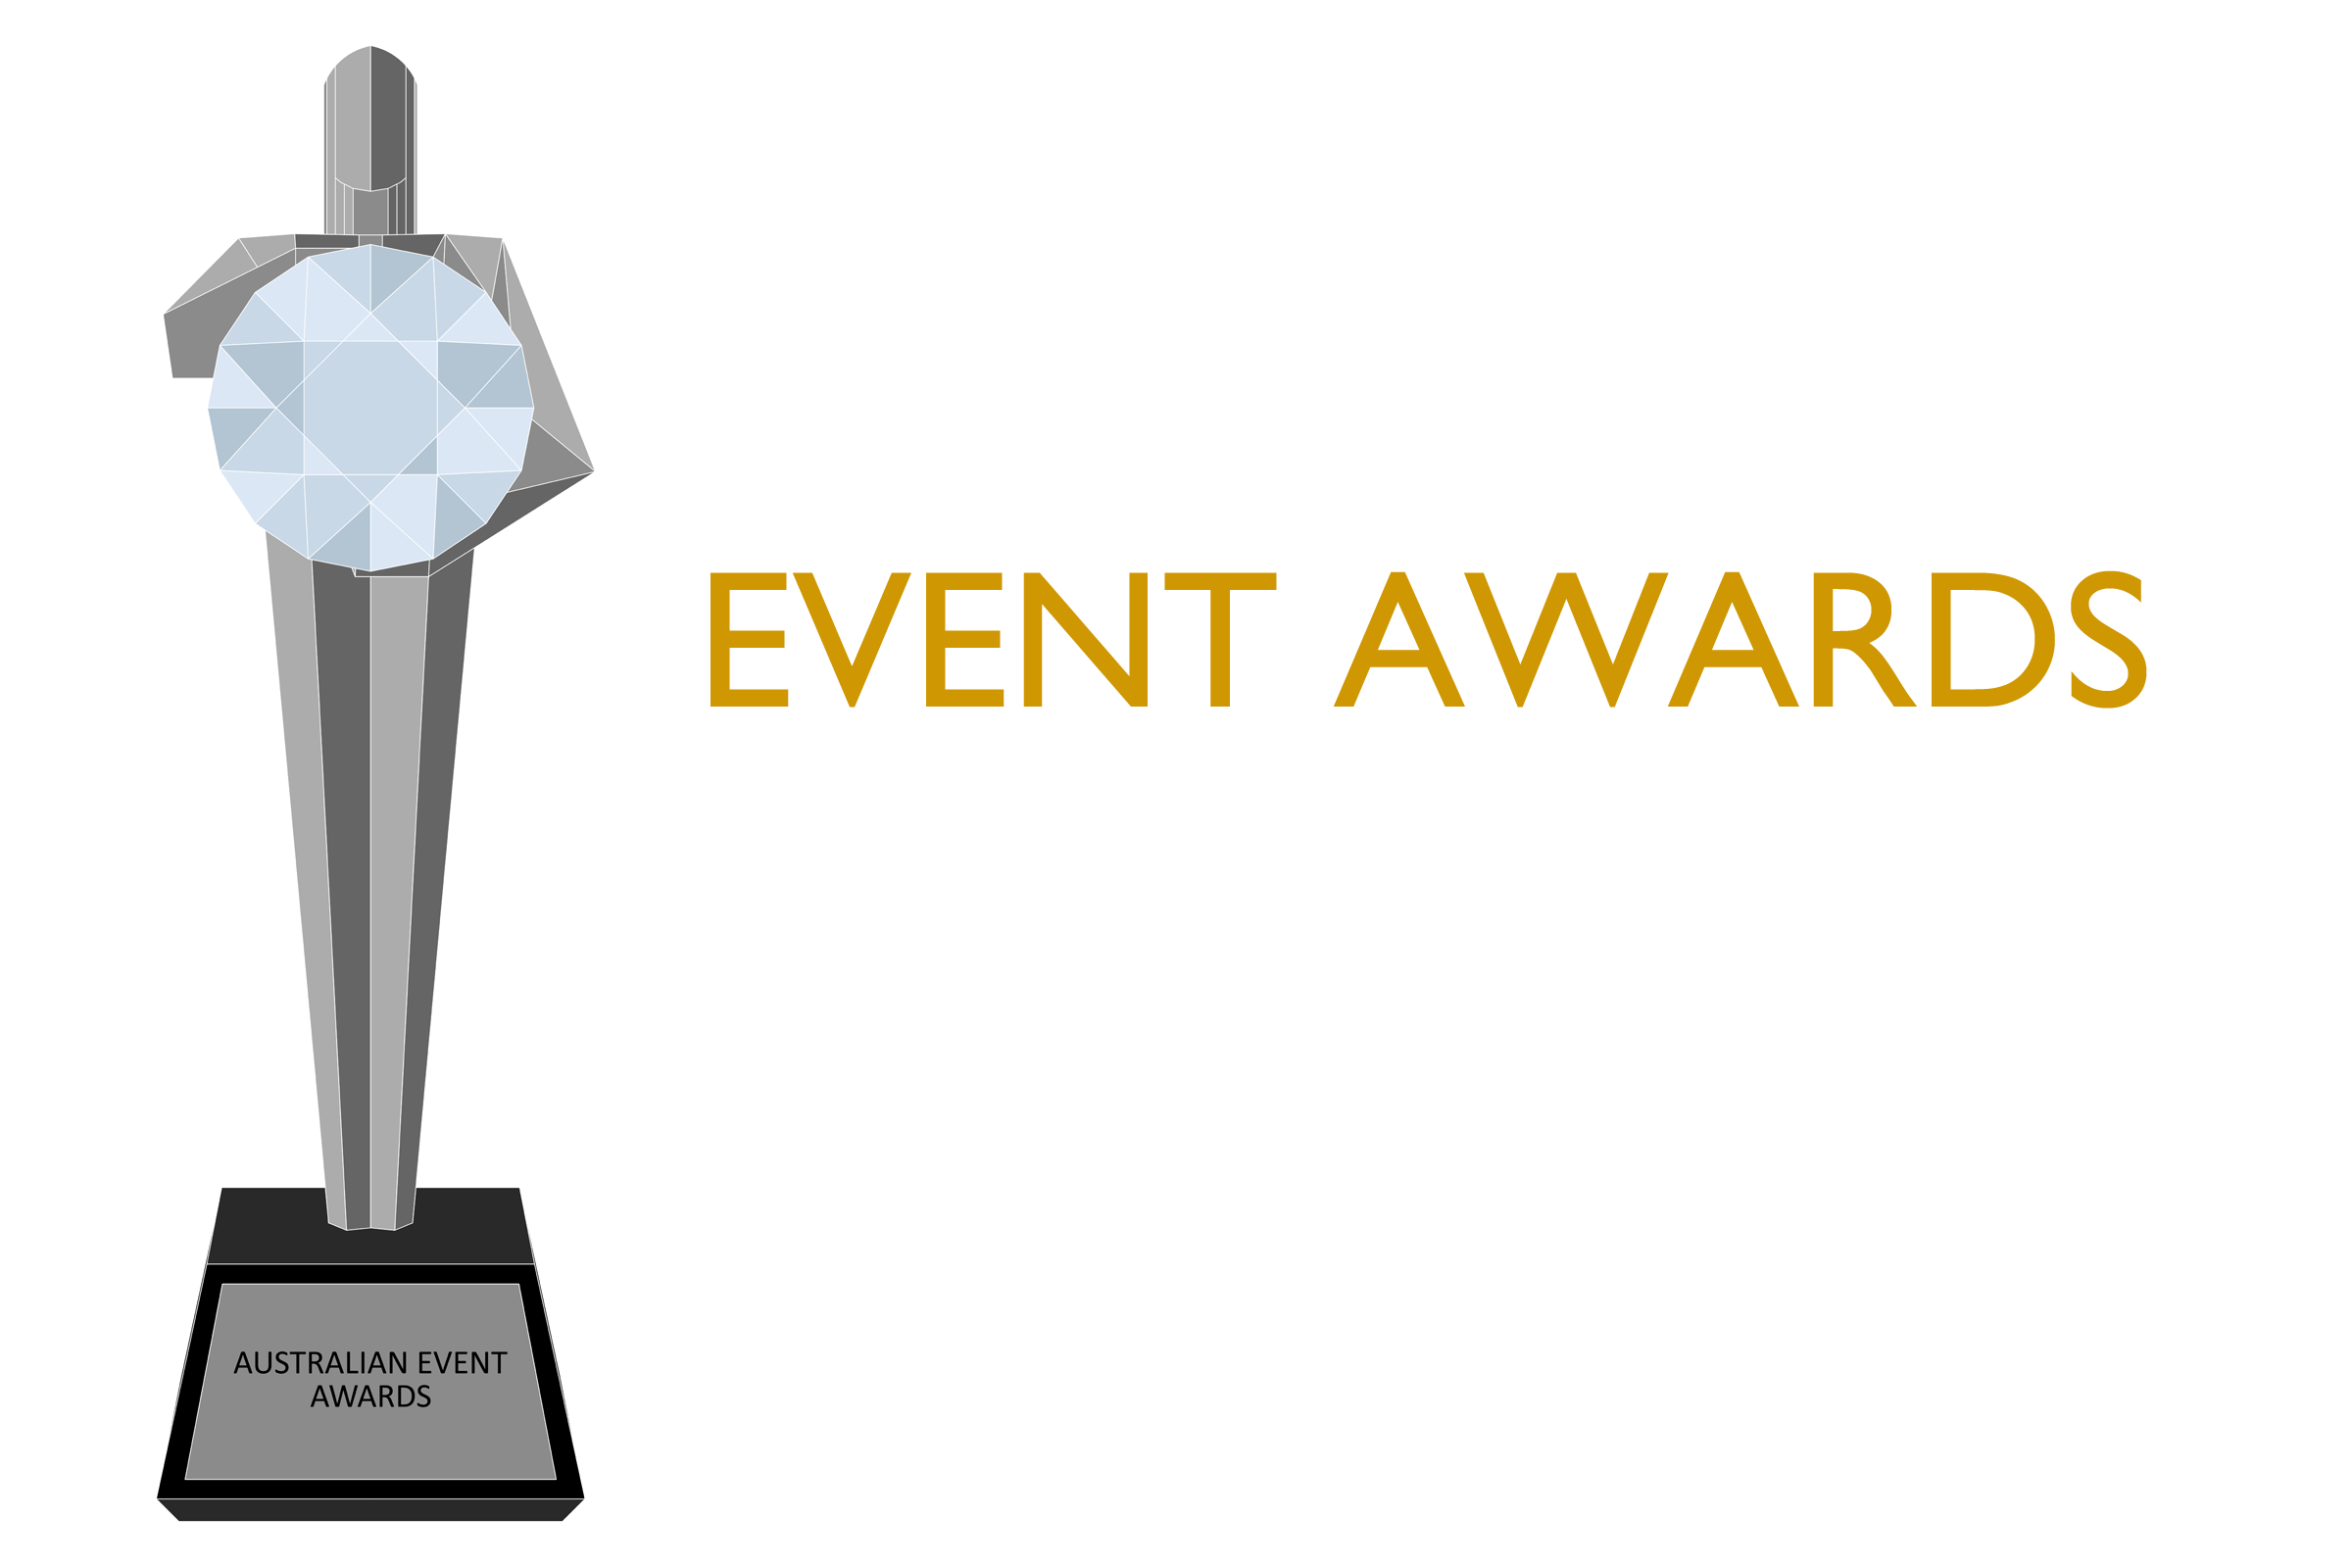 Australian event awards winner statue